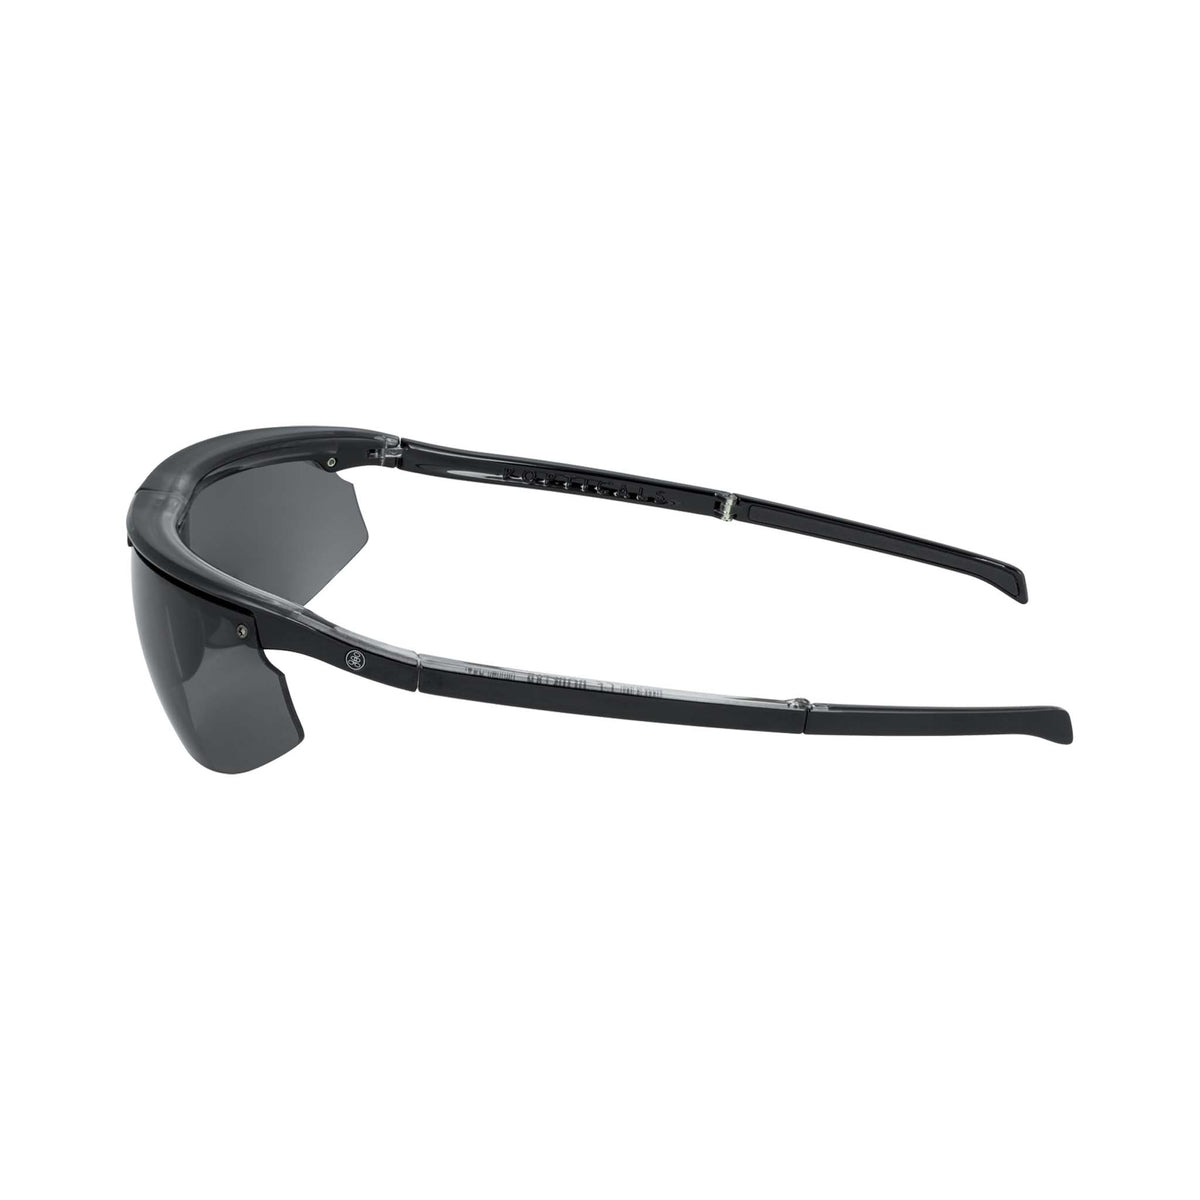 Popticals, Premium Compact Sunglasses, PopStar, 040040-BLGP, Polarized Sunglasses, Gloss Black Crystal Frame, Gray Lenses, Side View